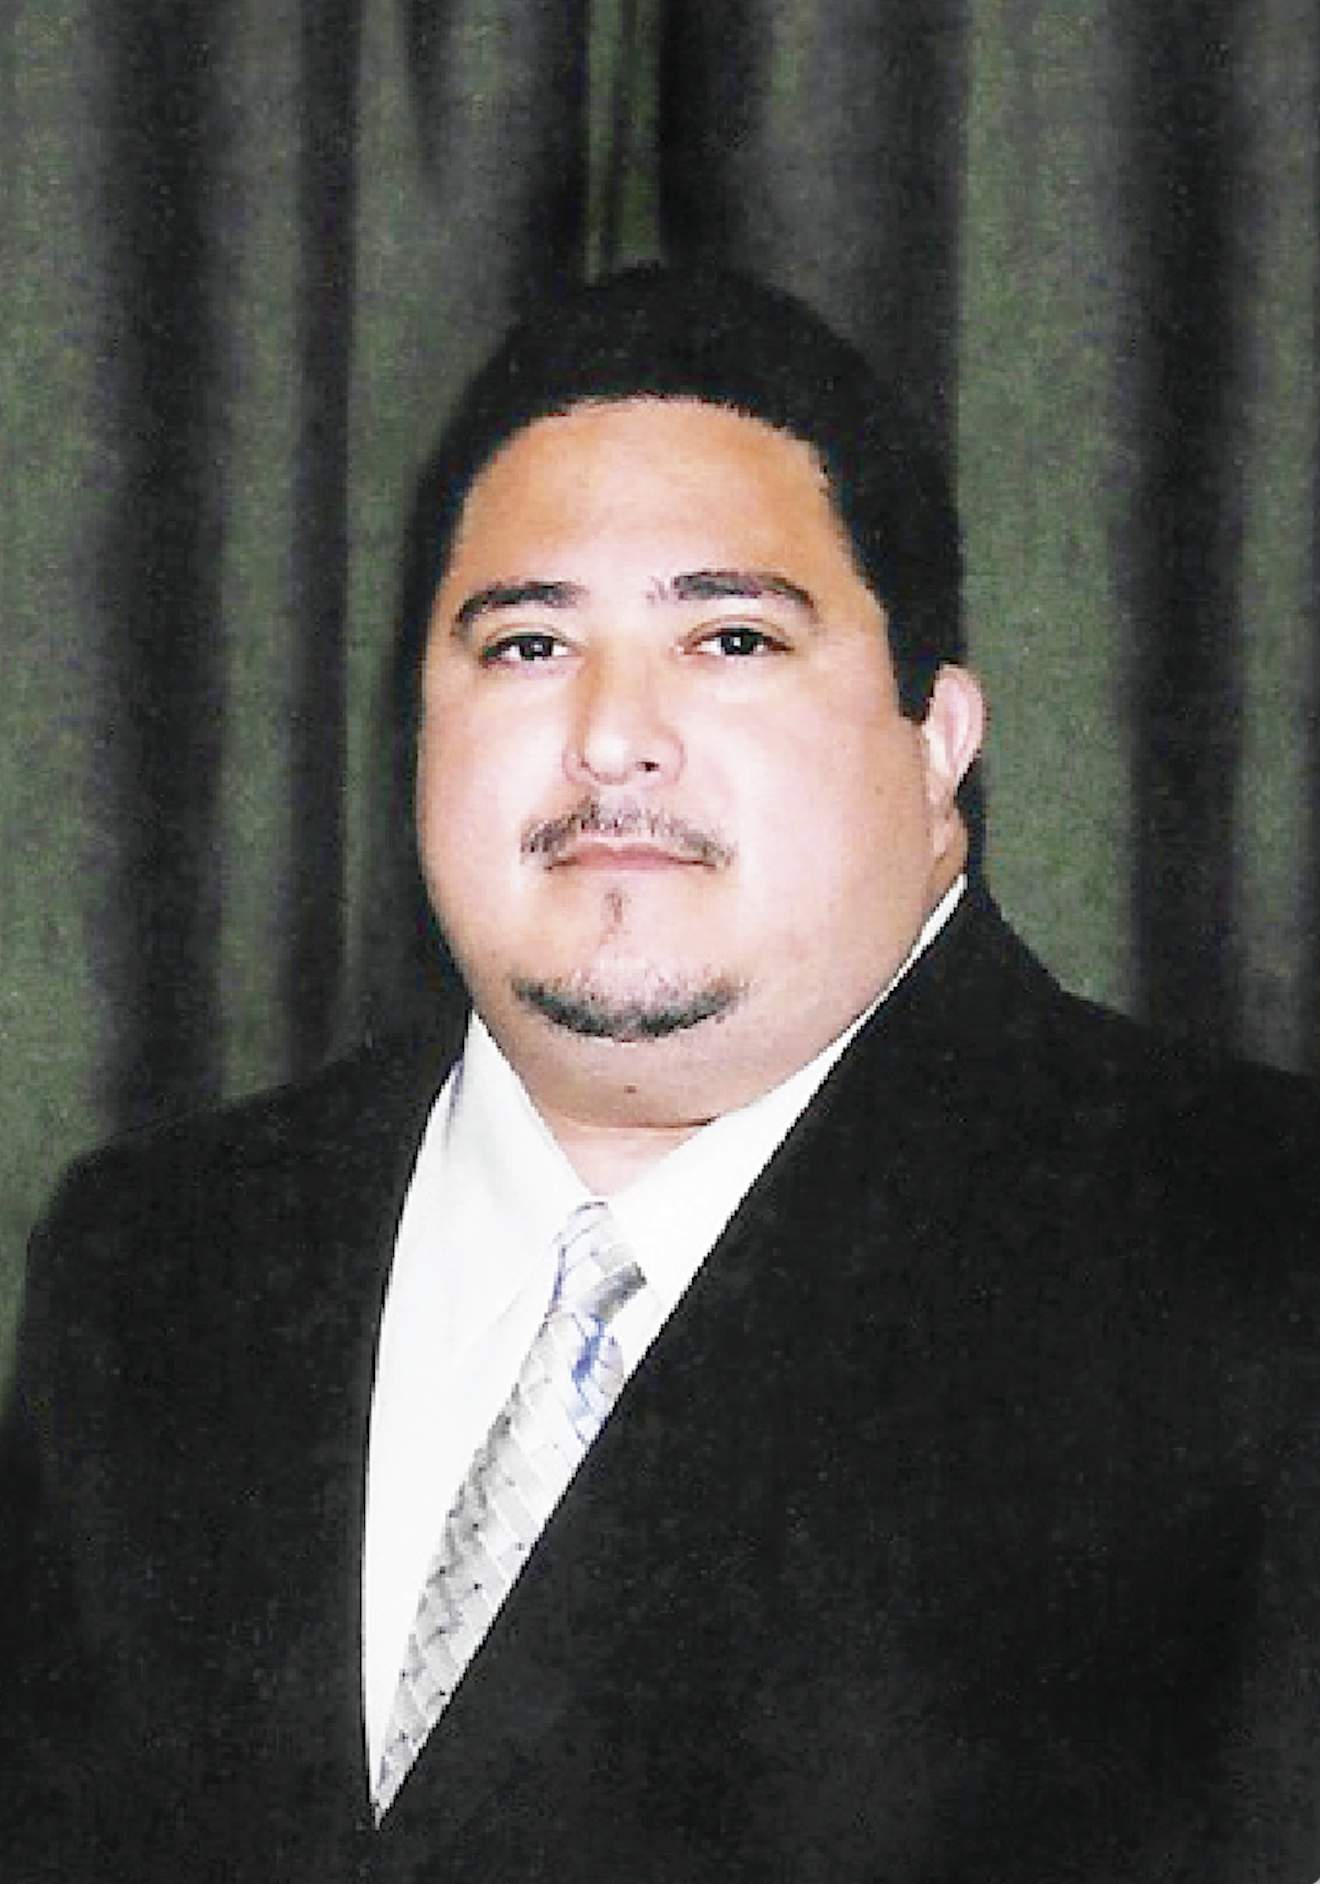 Funeral arrangements announced for HCSO detention Officer Robert Perez